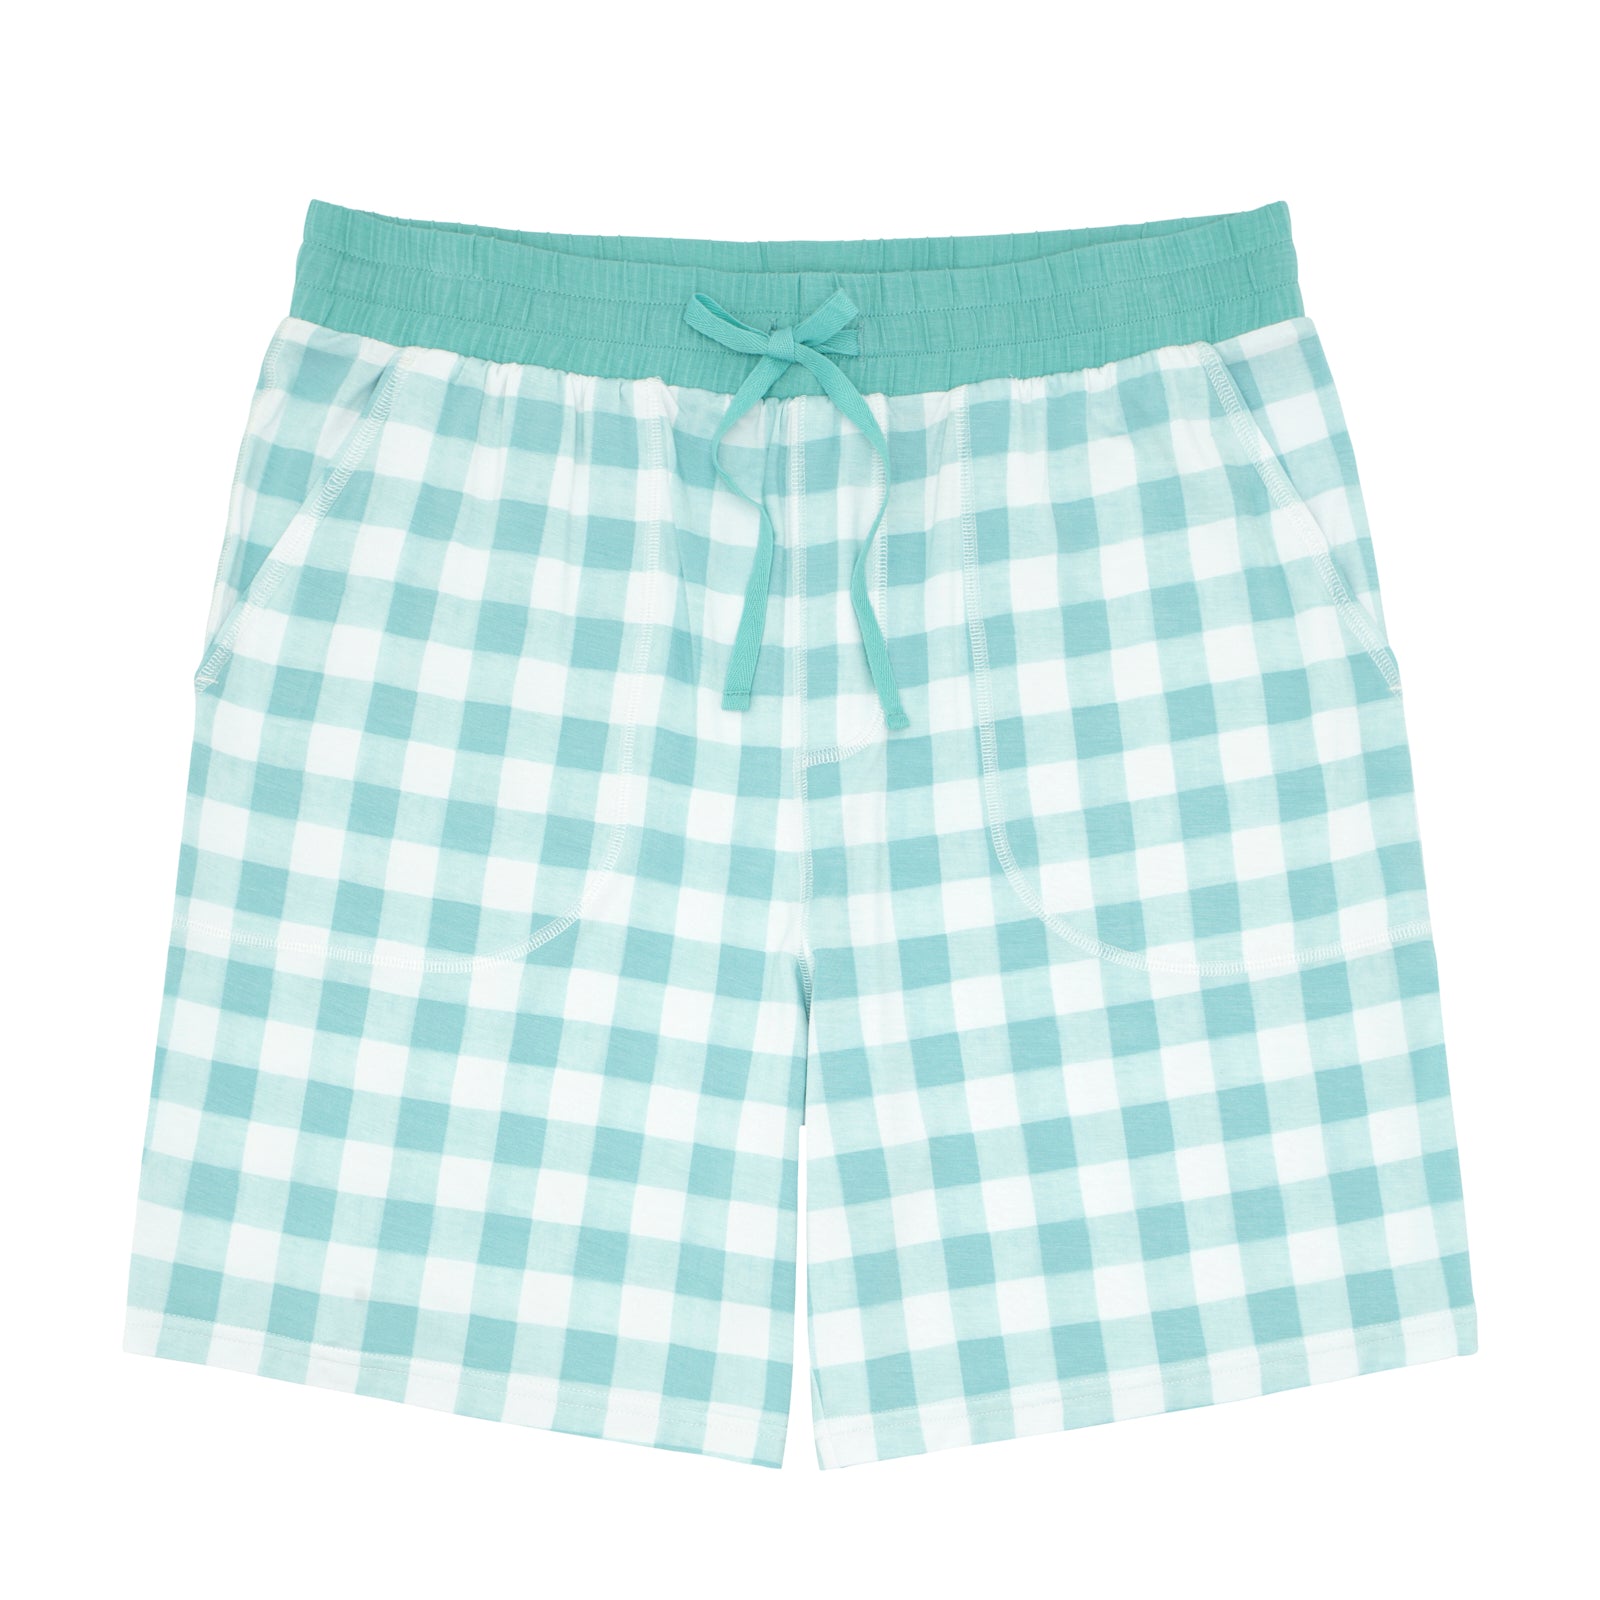 Flat lay image of men's Aqua Gingham pajama shorts